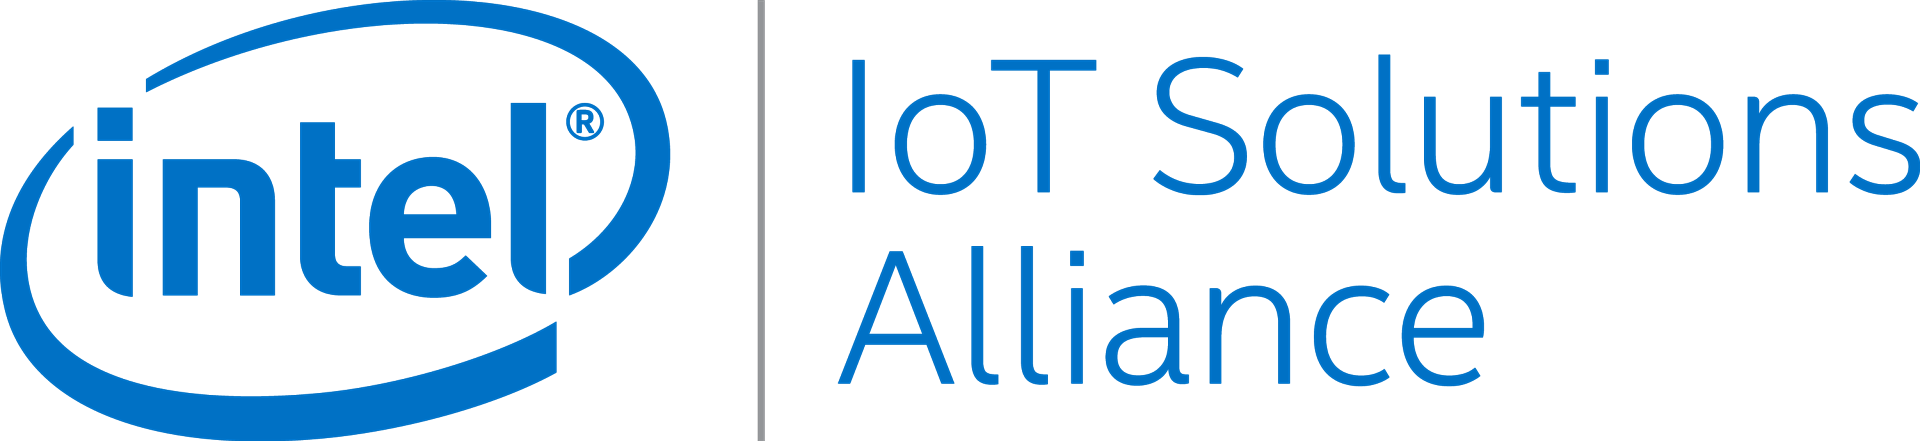 Intel IoT Solutions Alliance
&nbsp;&nbsp;
&nbsp;&nbsp;<br />